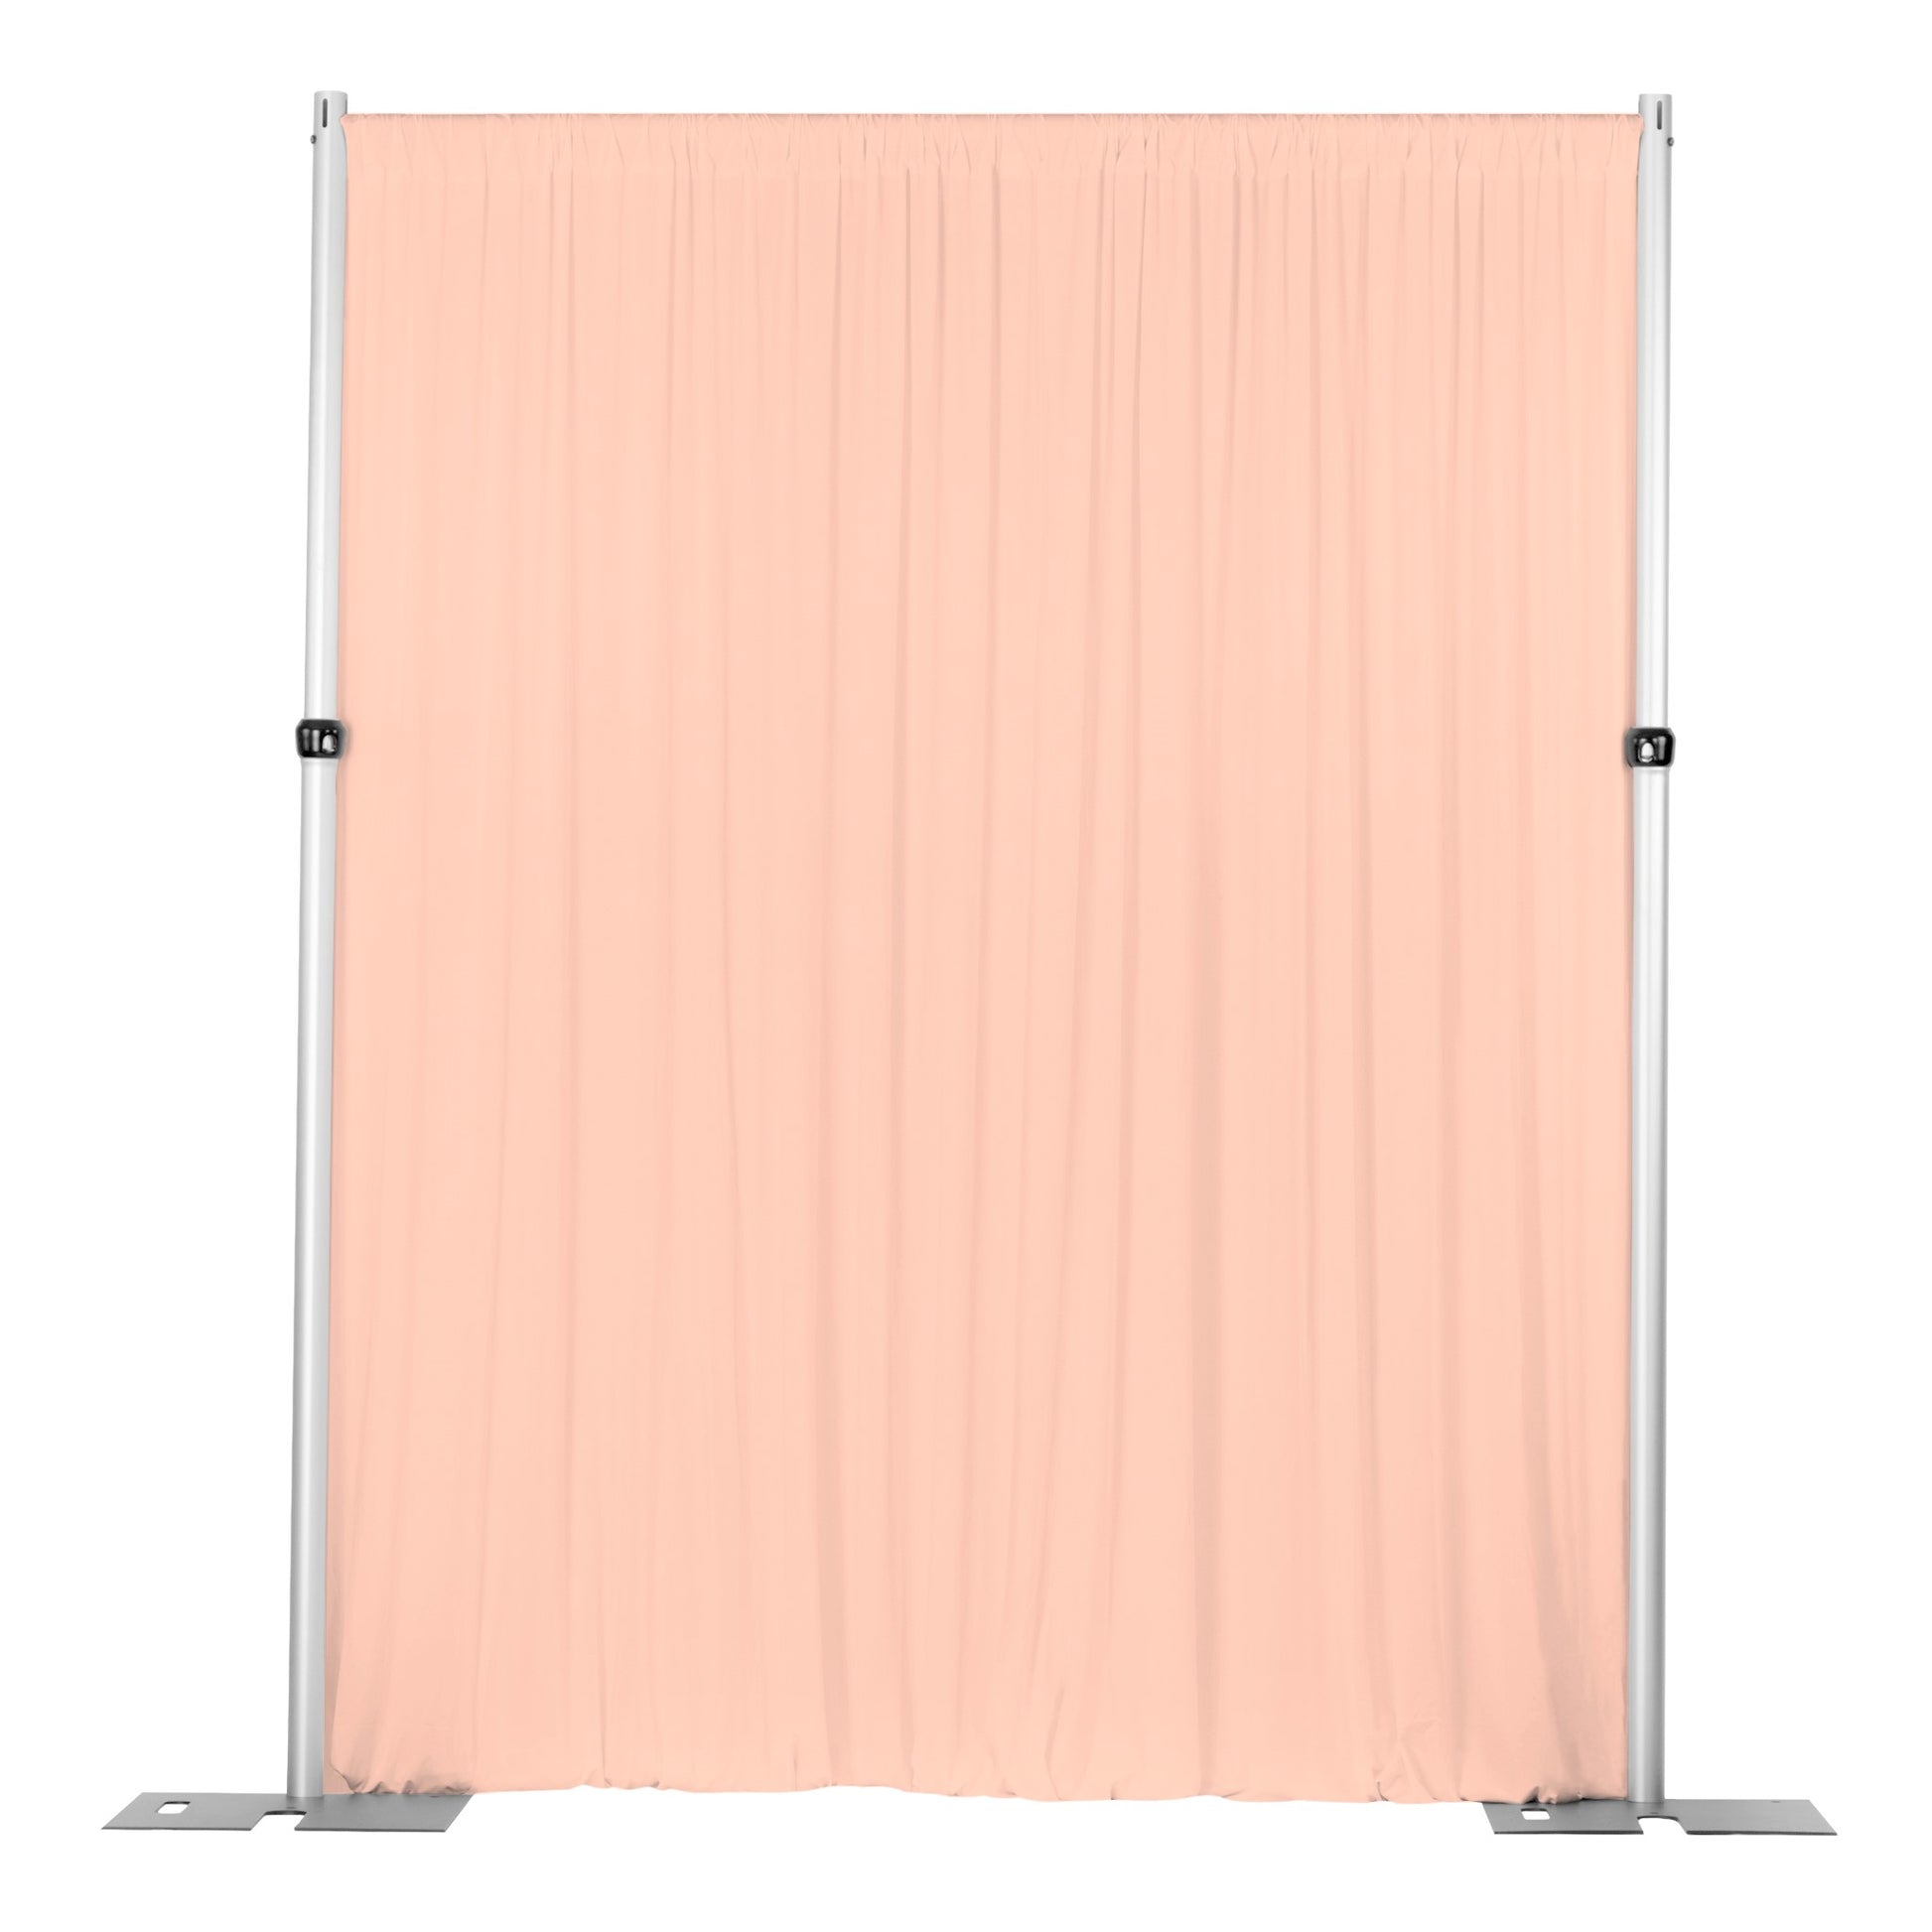 Spandex 4-way Stretch Drape Curtain 14ft H x 60" W - Blush/Rose Gold